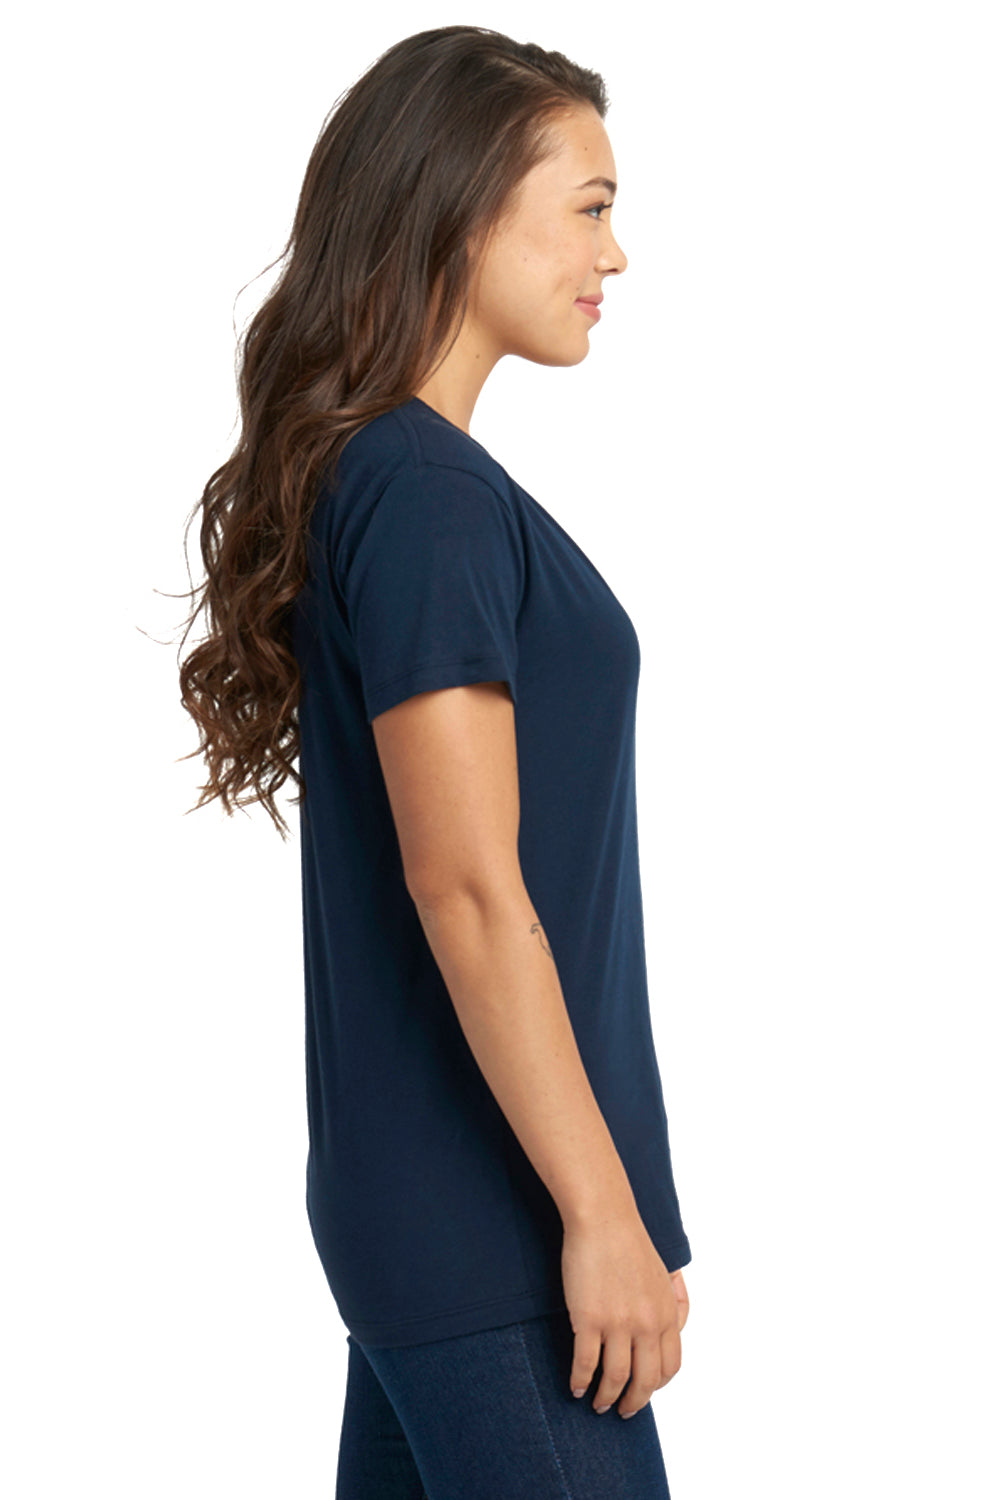 Next Level 3940 Womens Relaxed Short Sleeve V-Neck T-Shirt Navy Blue Side